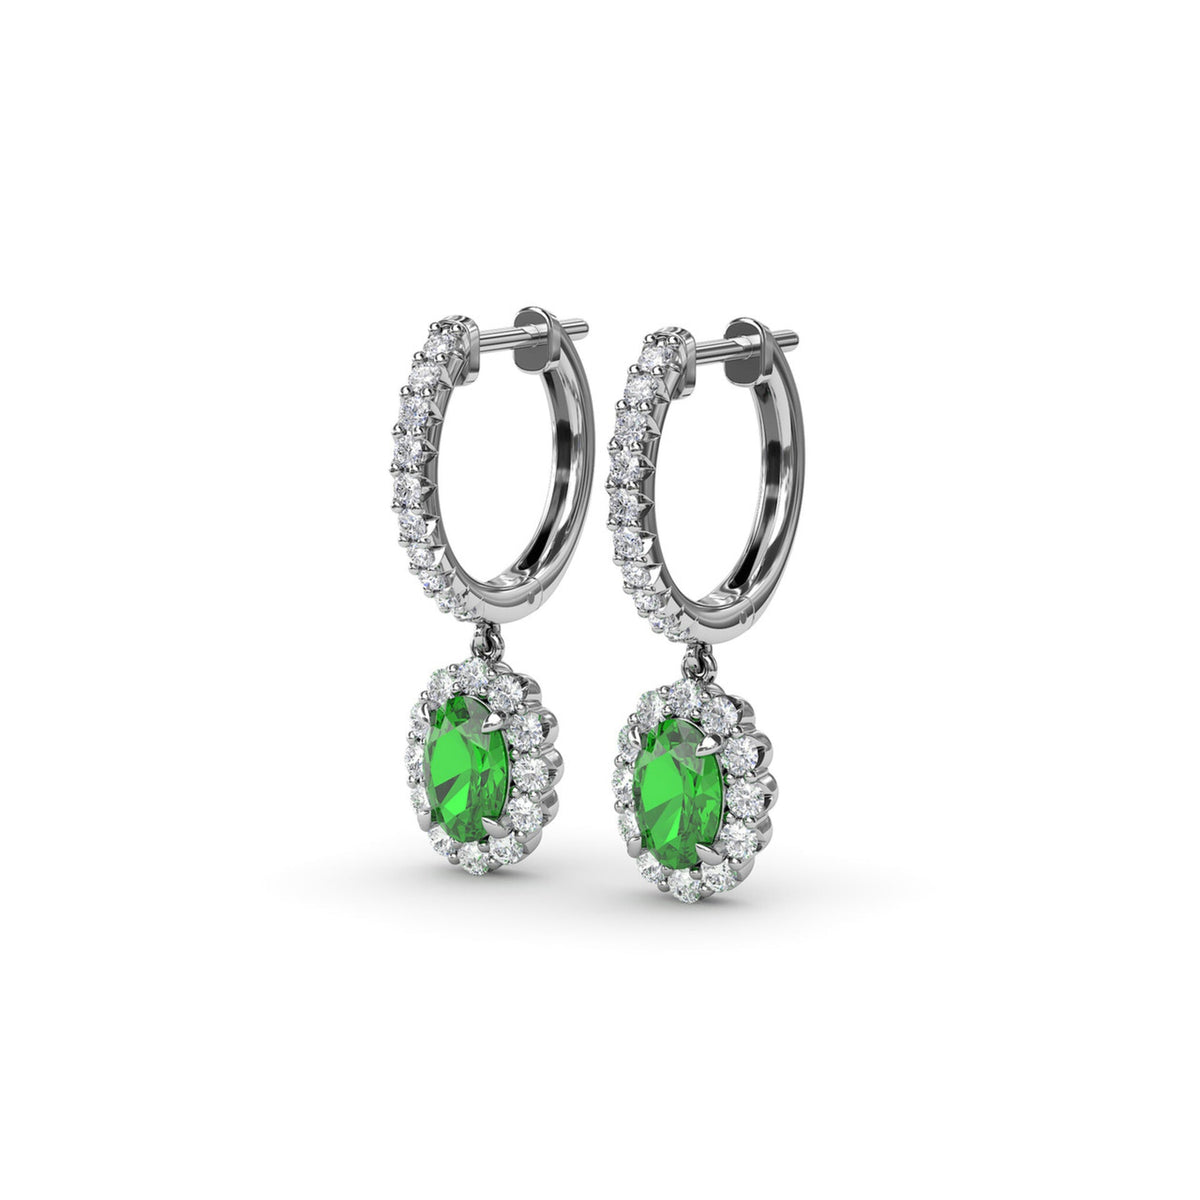 Elegant Emerald and Diamond Drop Earrings from Robinson's Jewelers